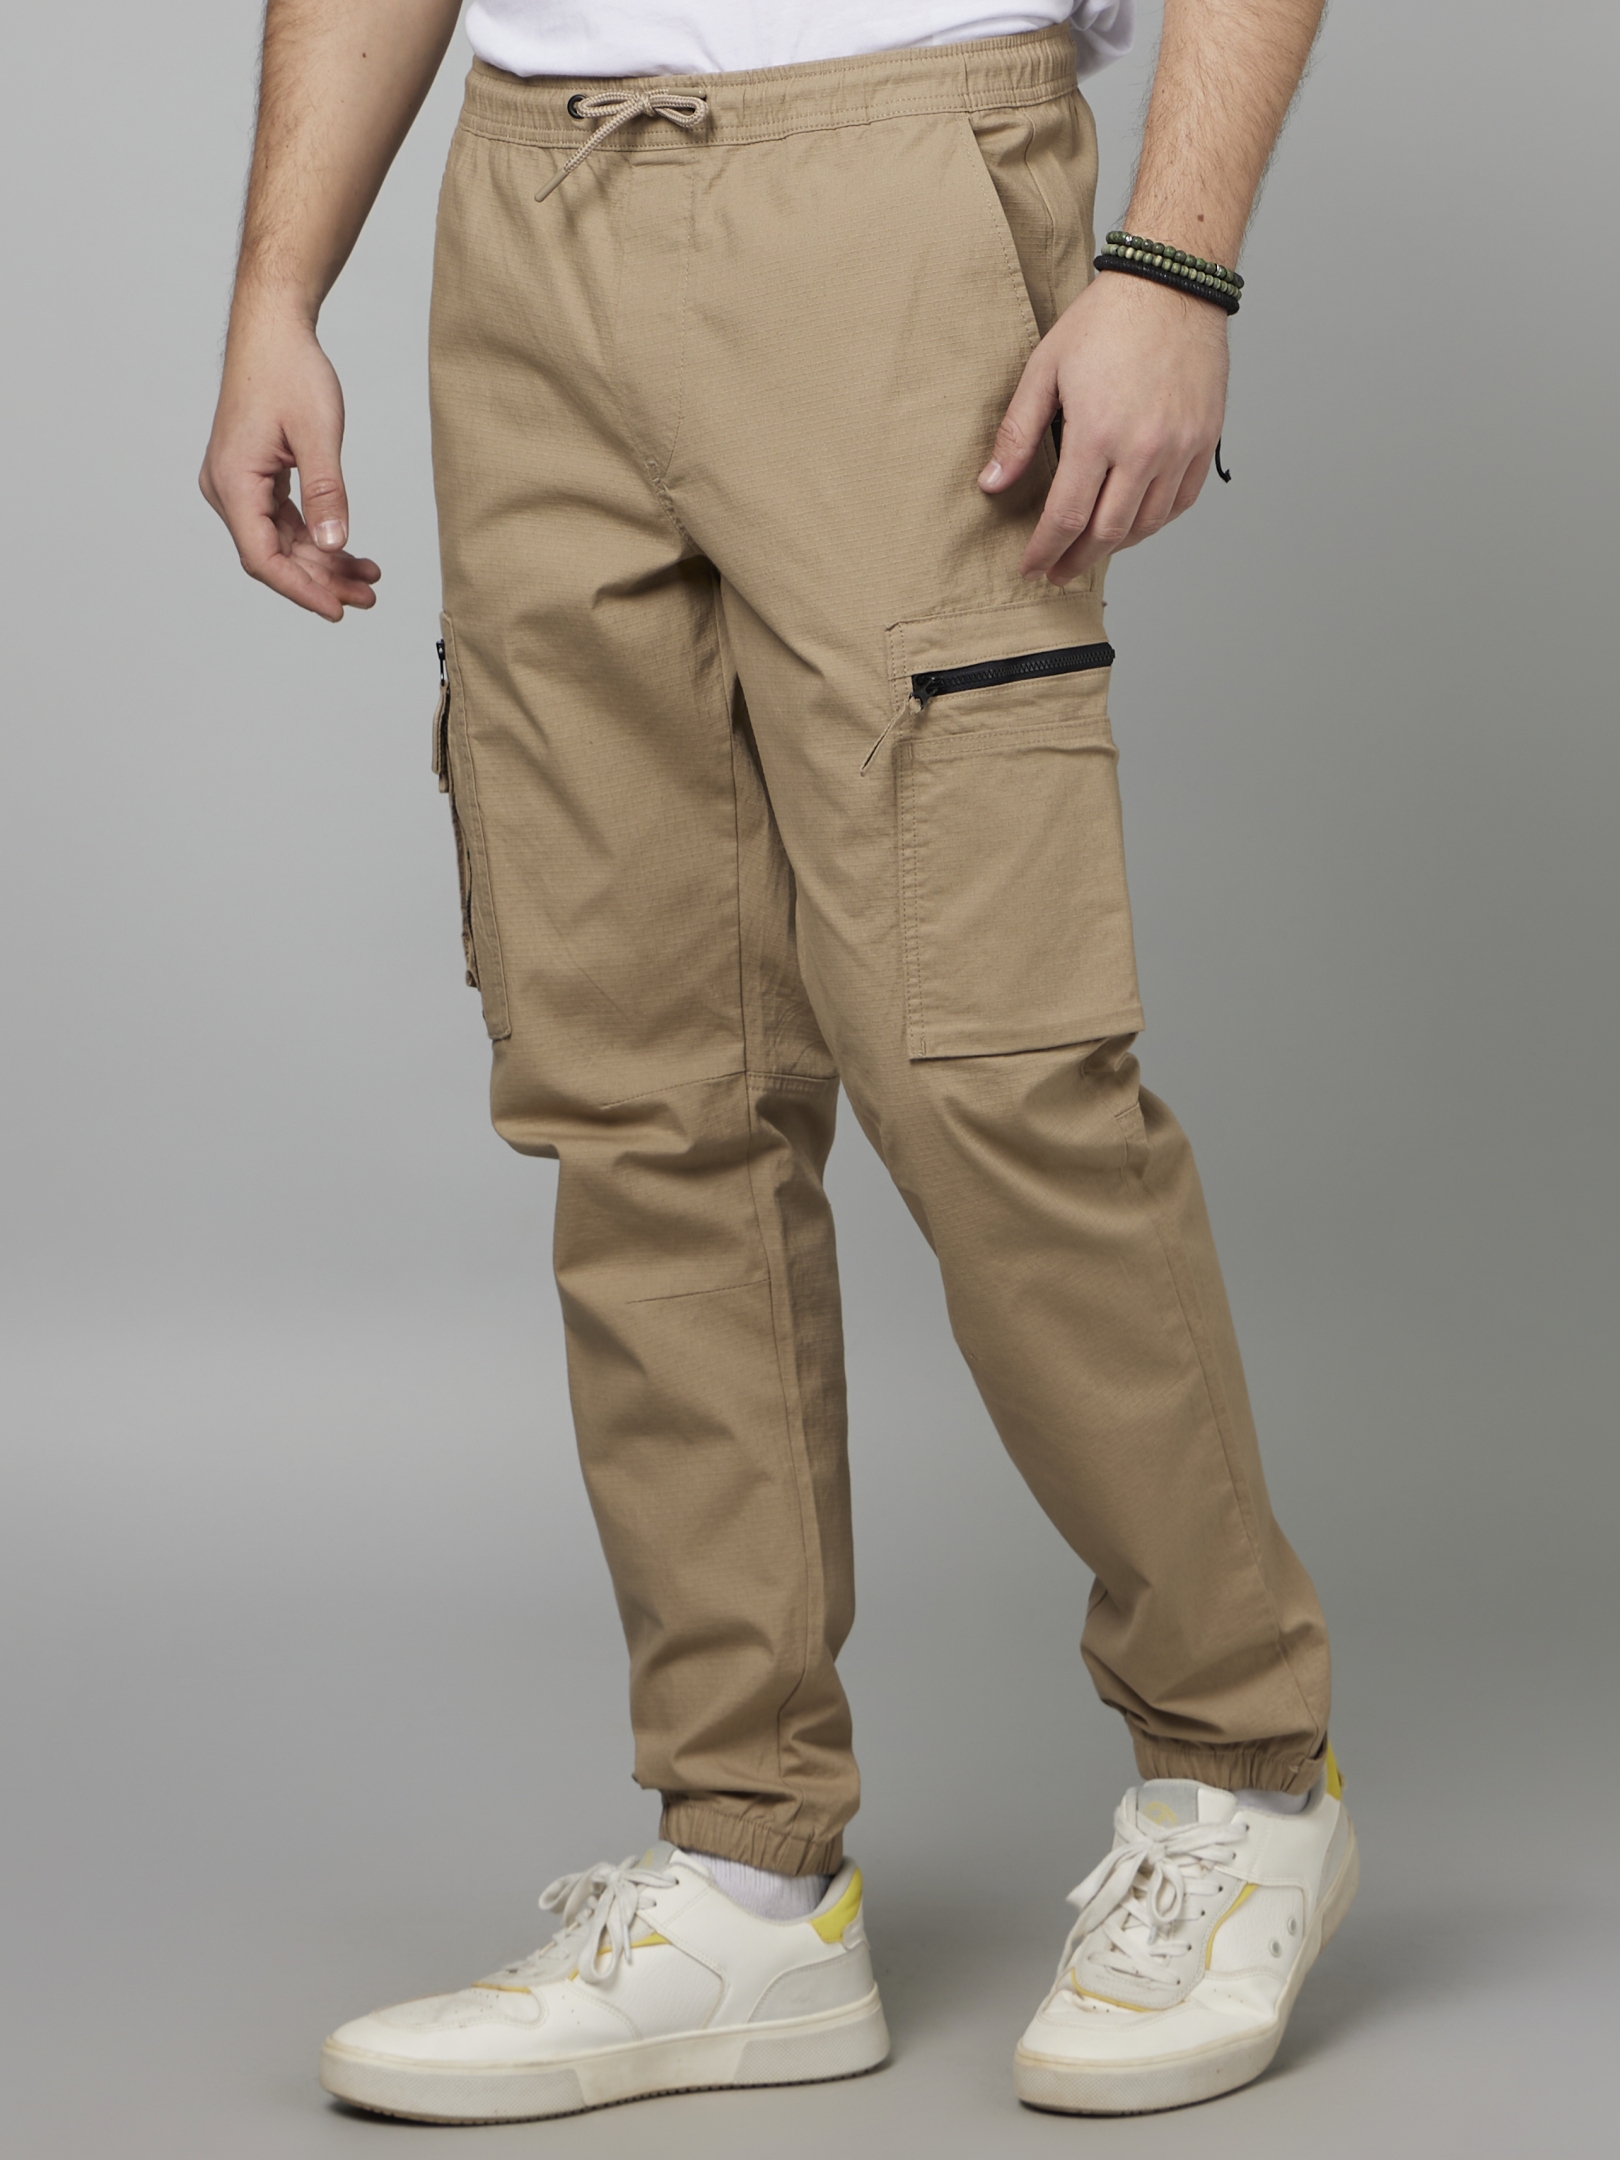 CELIO Les Essentiels Cool Stretch Trousers Size 36 W 28 New Label | eBay